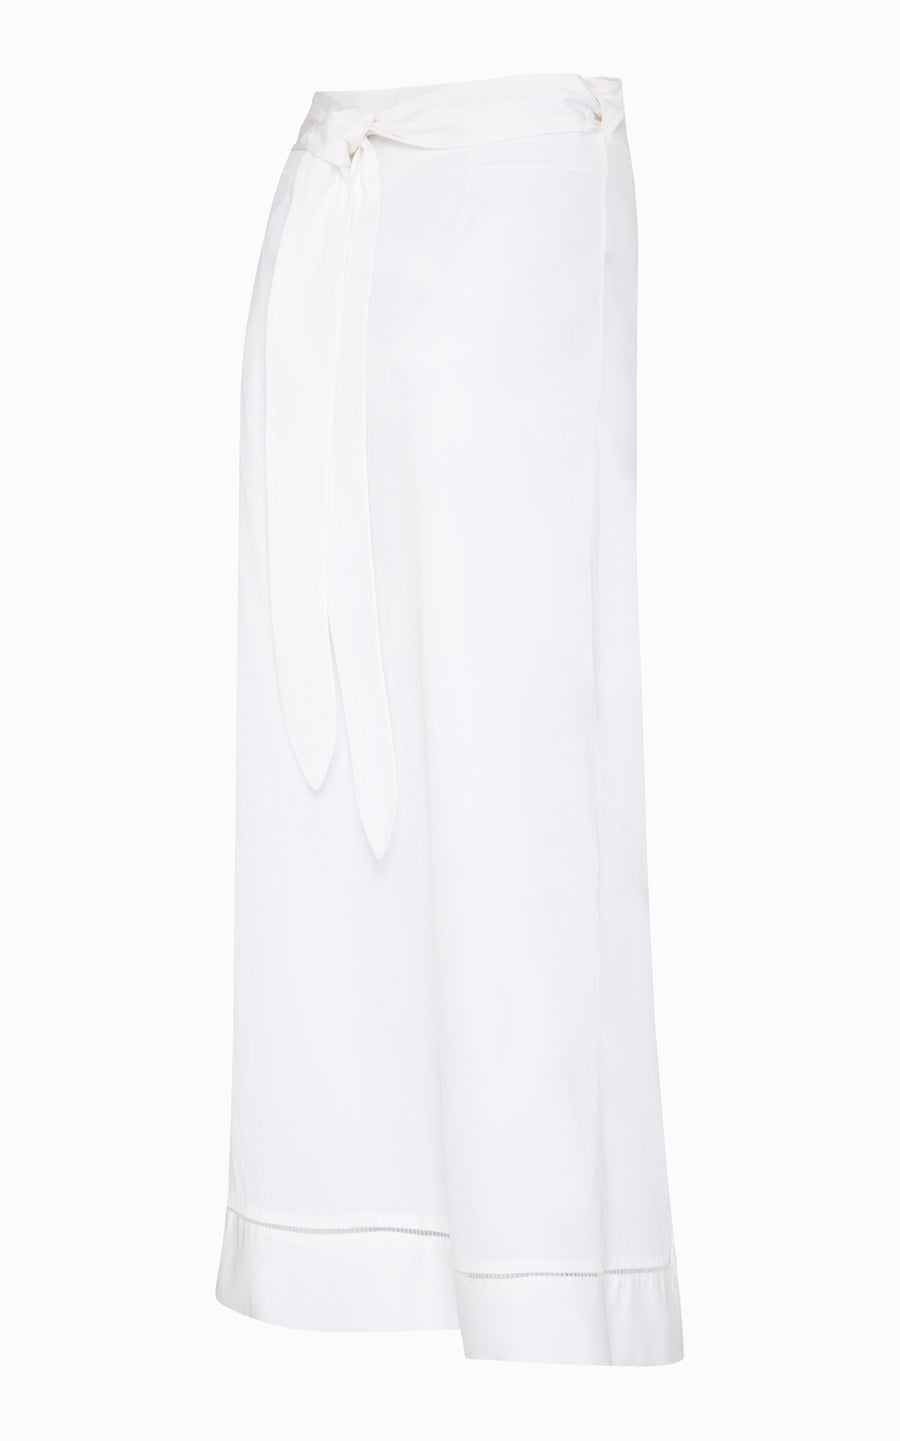 Voltare Wrap Skirt | White